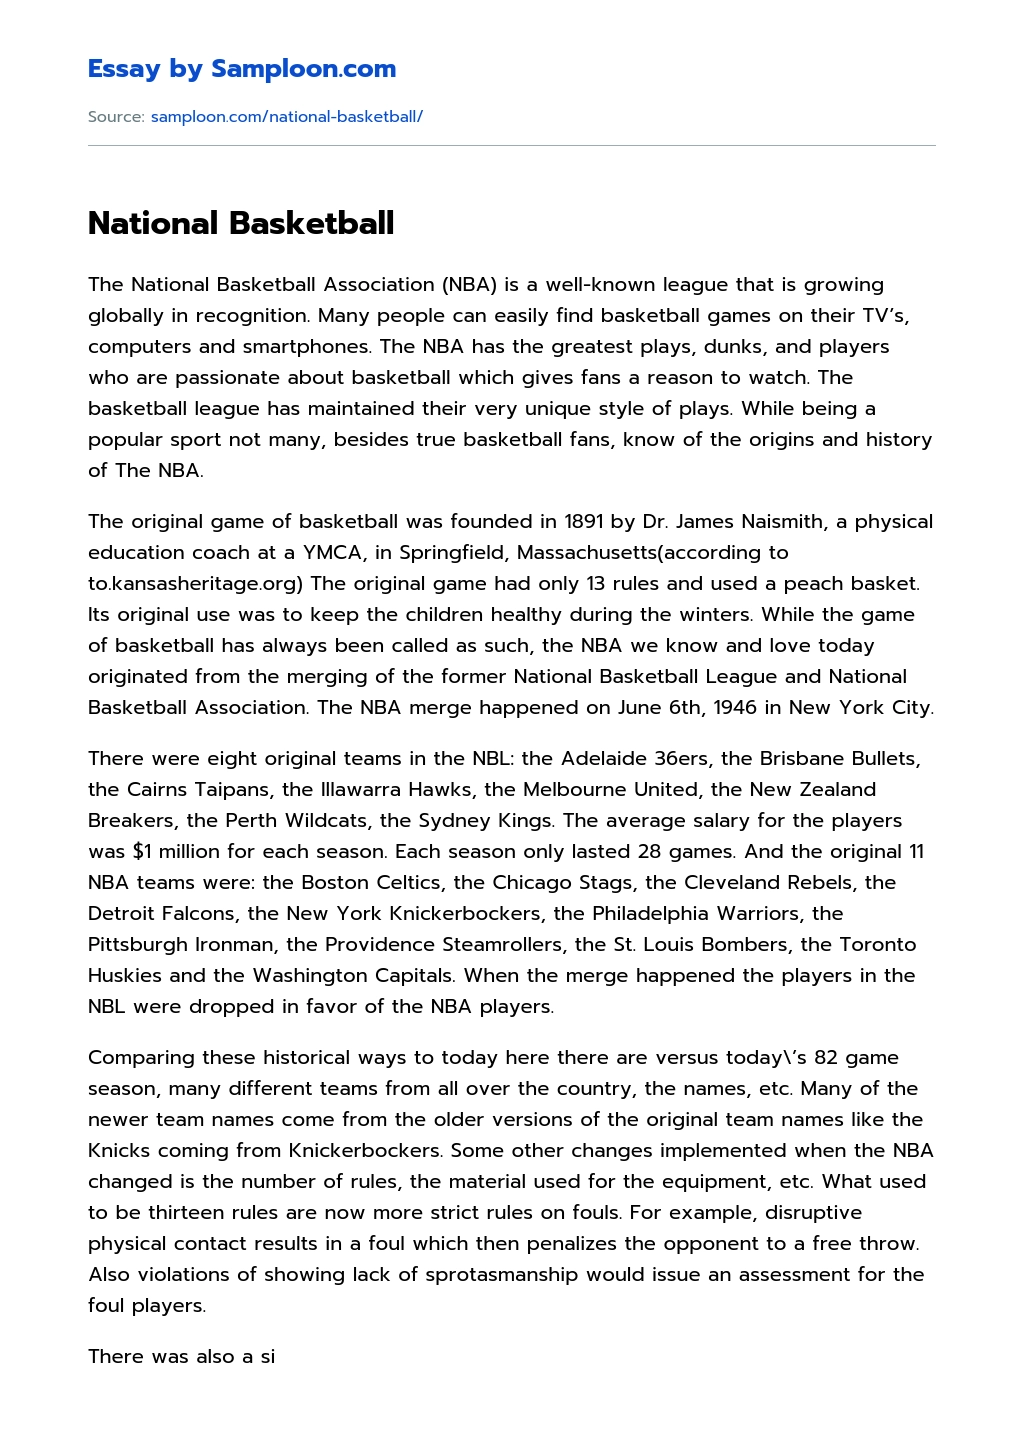 National Basketball essay